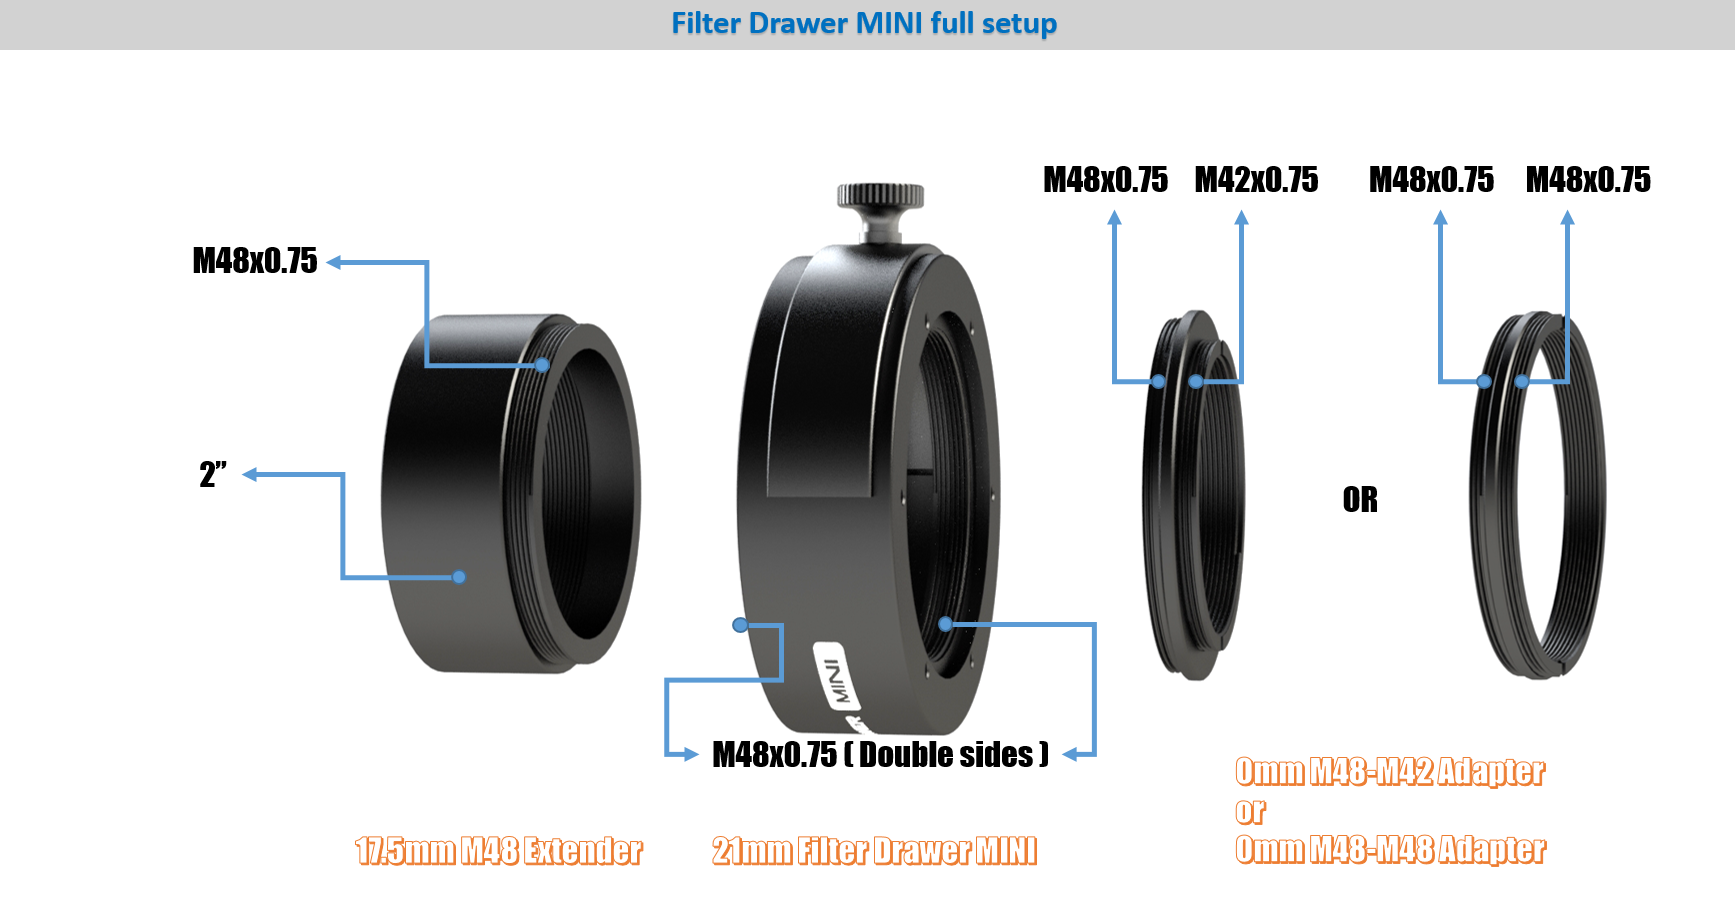 Filter-Drawer-MINI-full-setup2.png (1735×914)